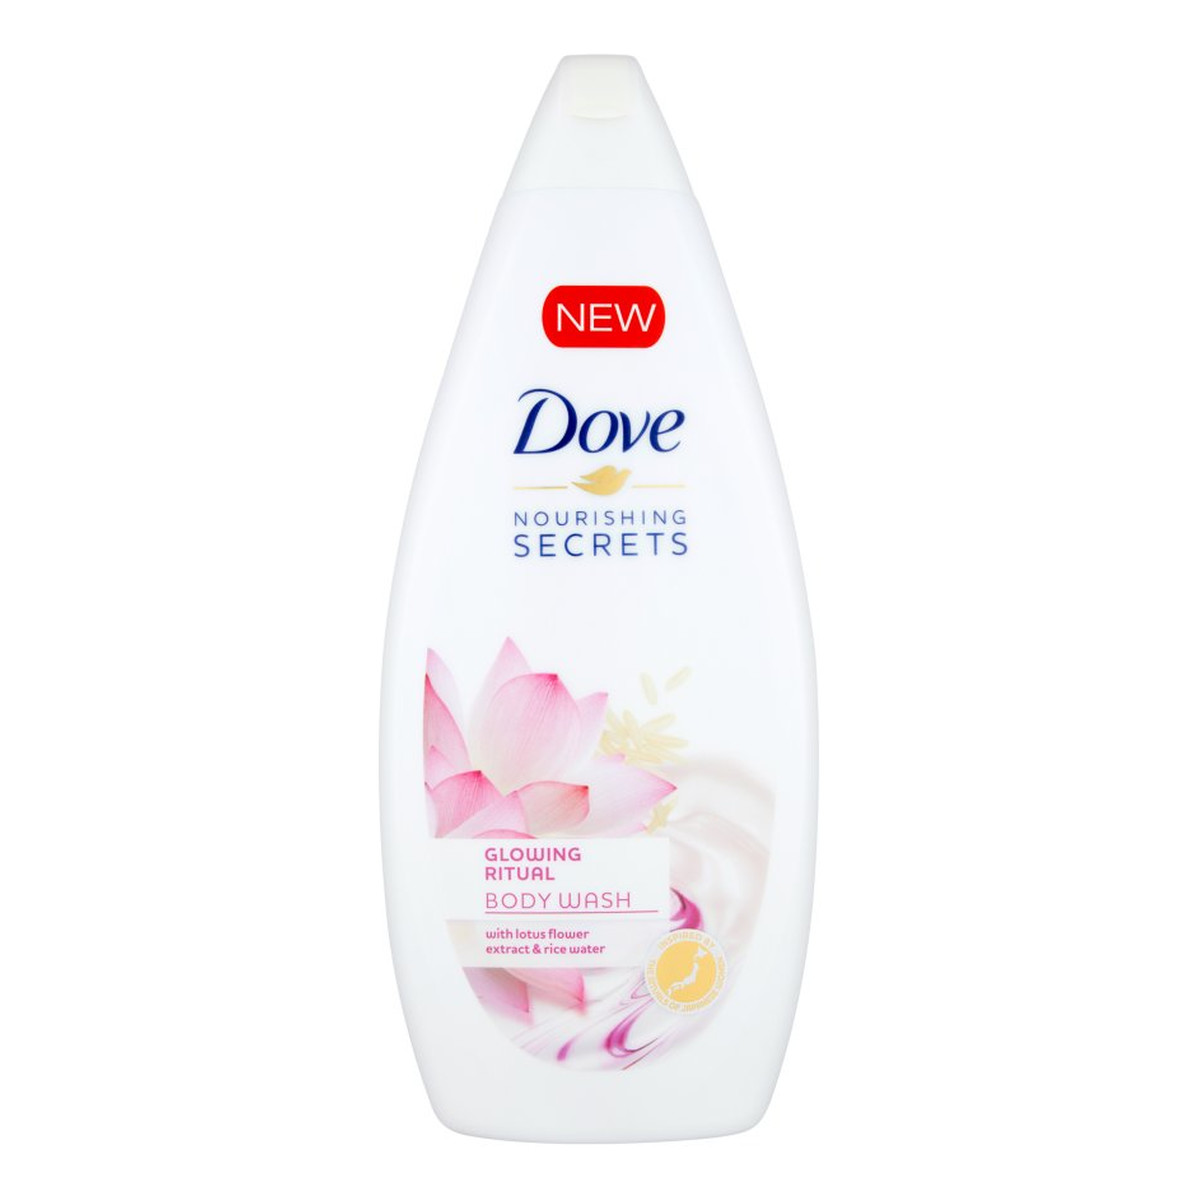 Dove Nourishing Secrets żel pod prysznic Flower Extract & Rice Water 750ml